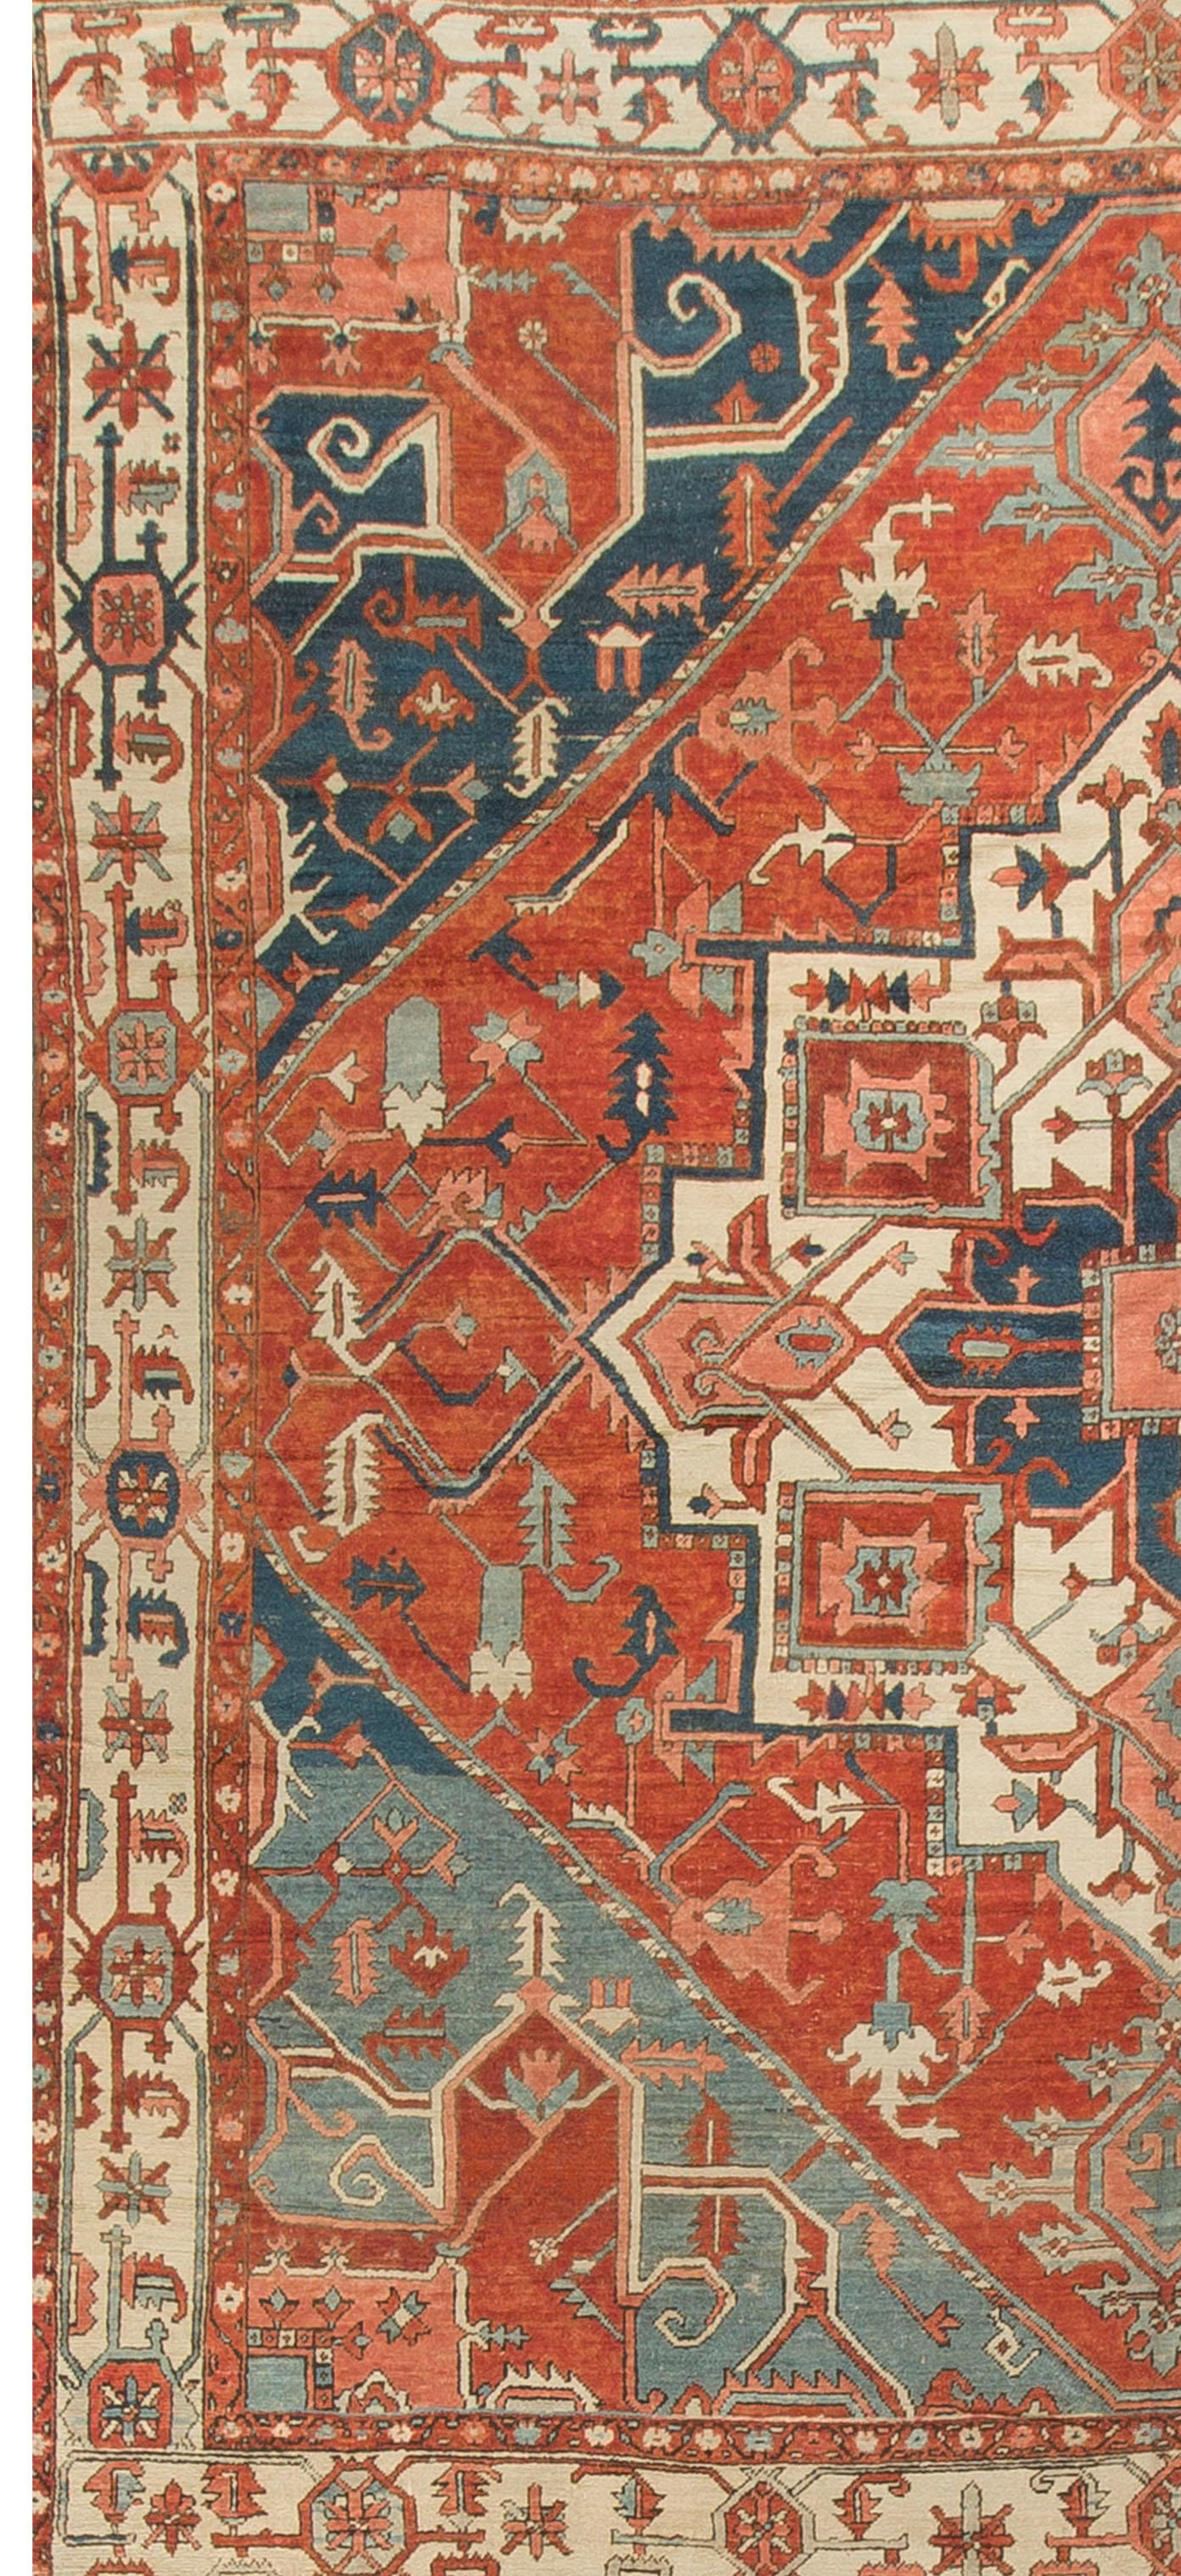 Hand-Woven Antique Persian Heriz Rug Carpet Circa 1890 For Sale